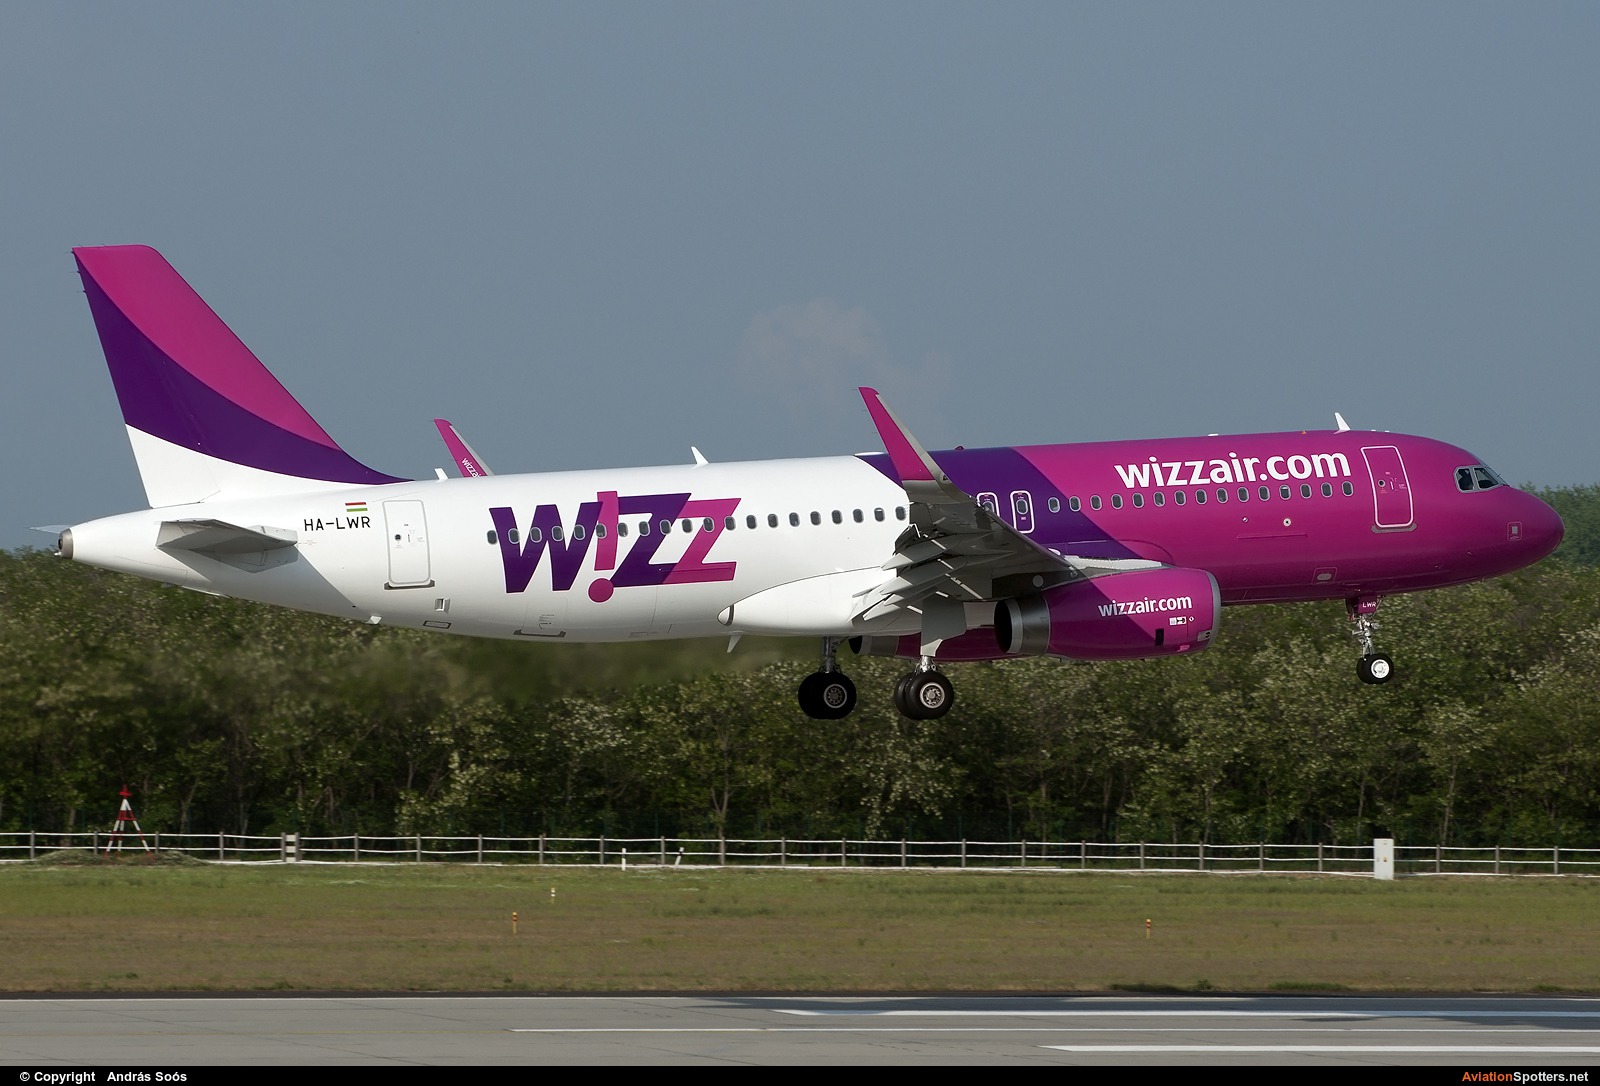 Wizz Air  -  A320  (HA-LWR) By András Soós (sas1965)